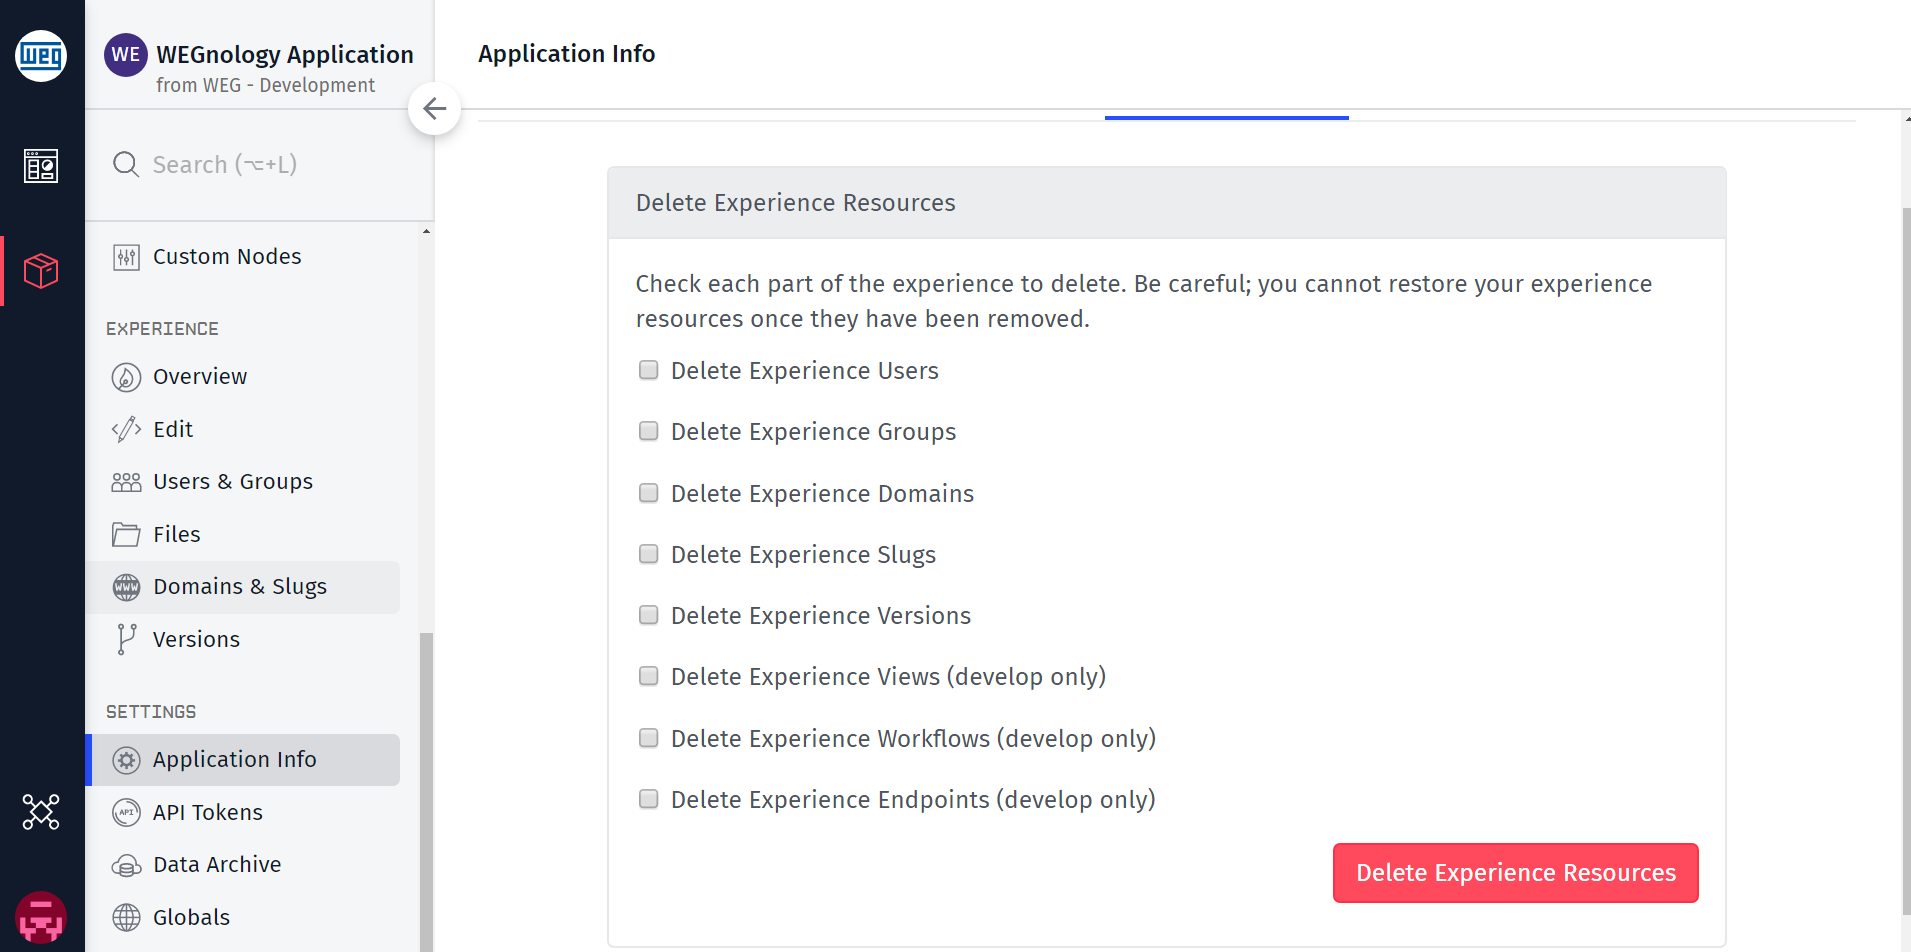 Bulk Delete Experience Resources